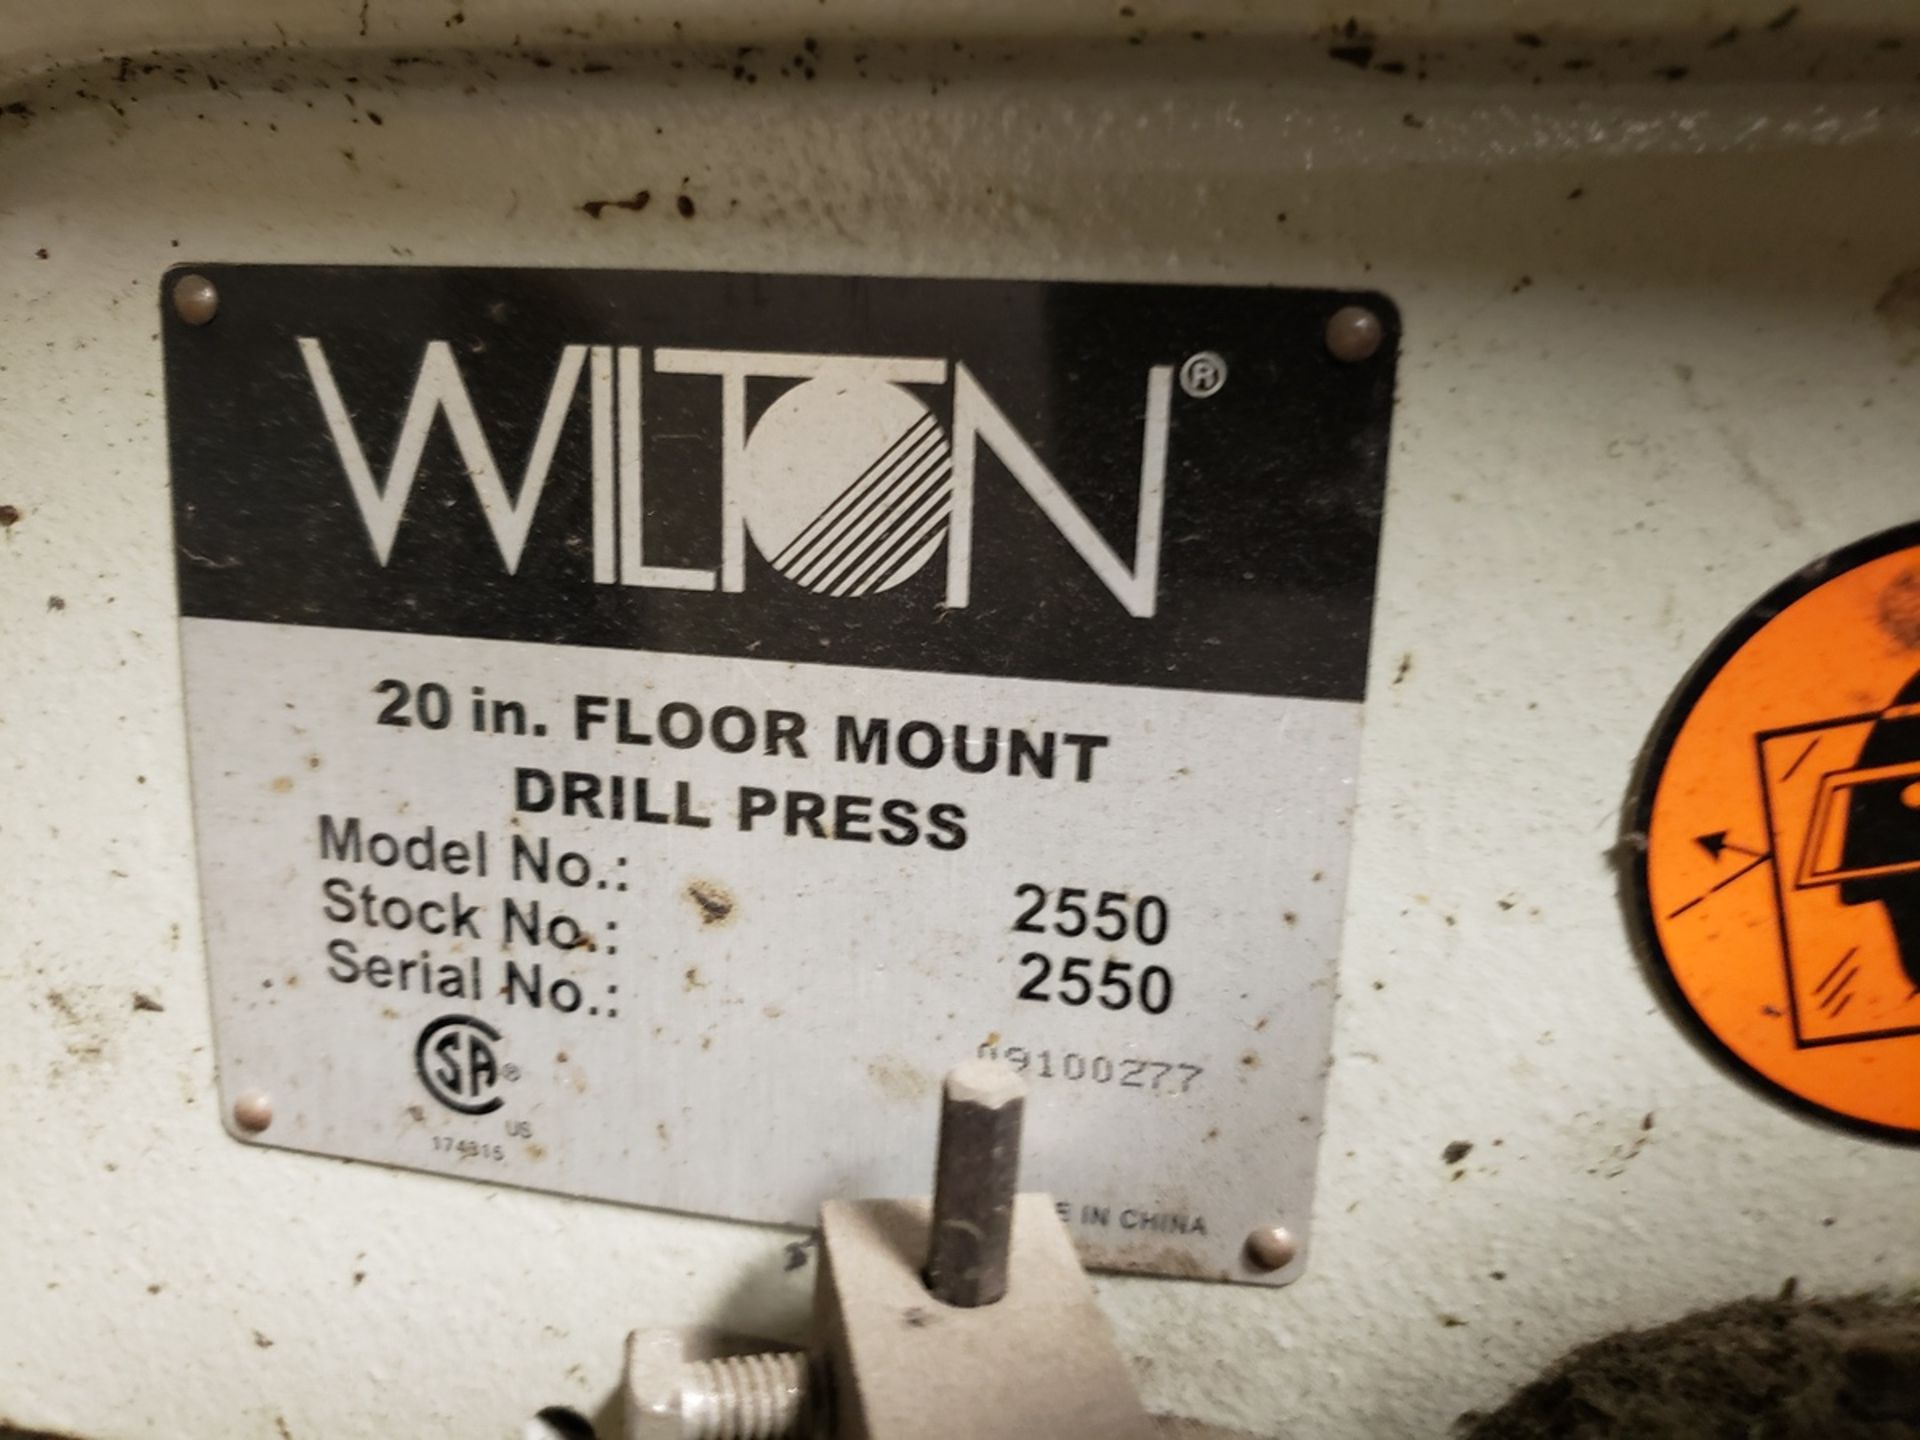 Wilton Drill Press, M# 2550 | Rig Fee $185 - Image 2 of 2